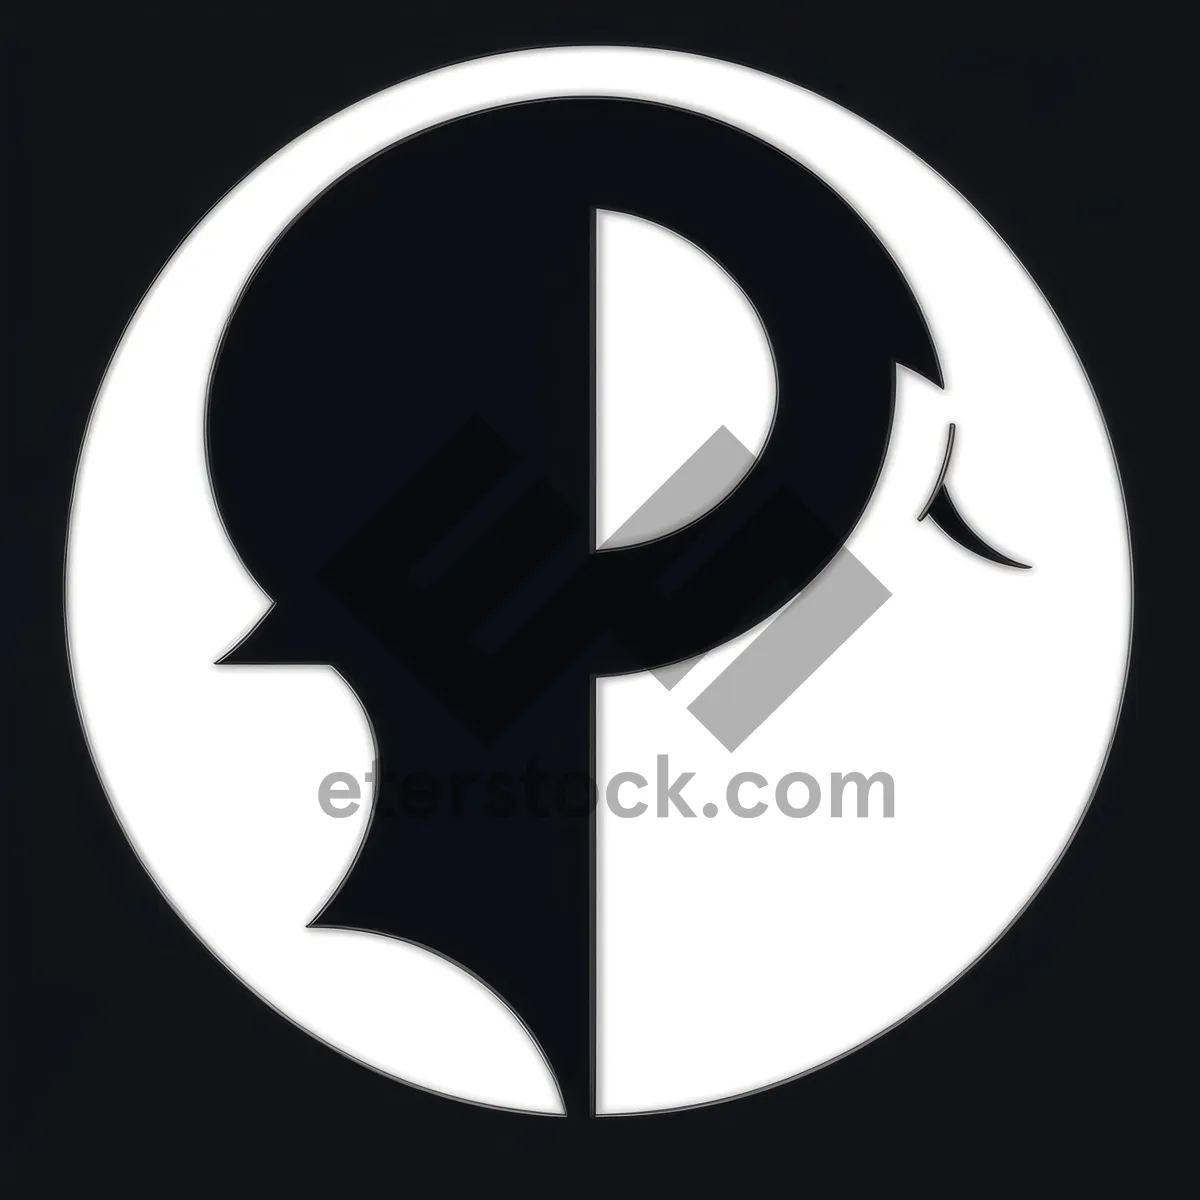 Picture of Black Round Shiny Icon Set: Graphic Button Symbols